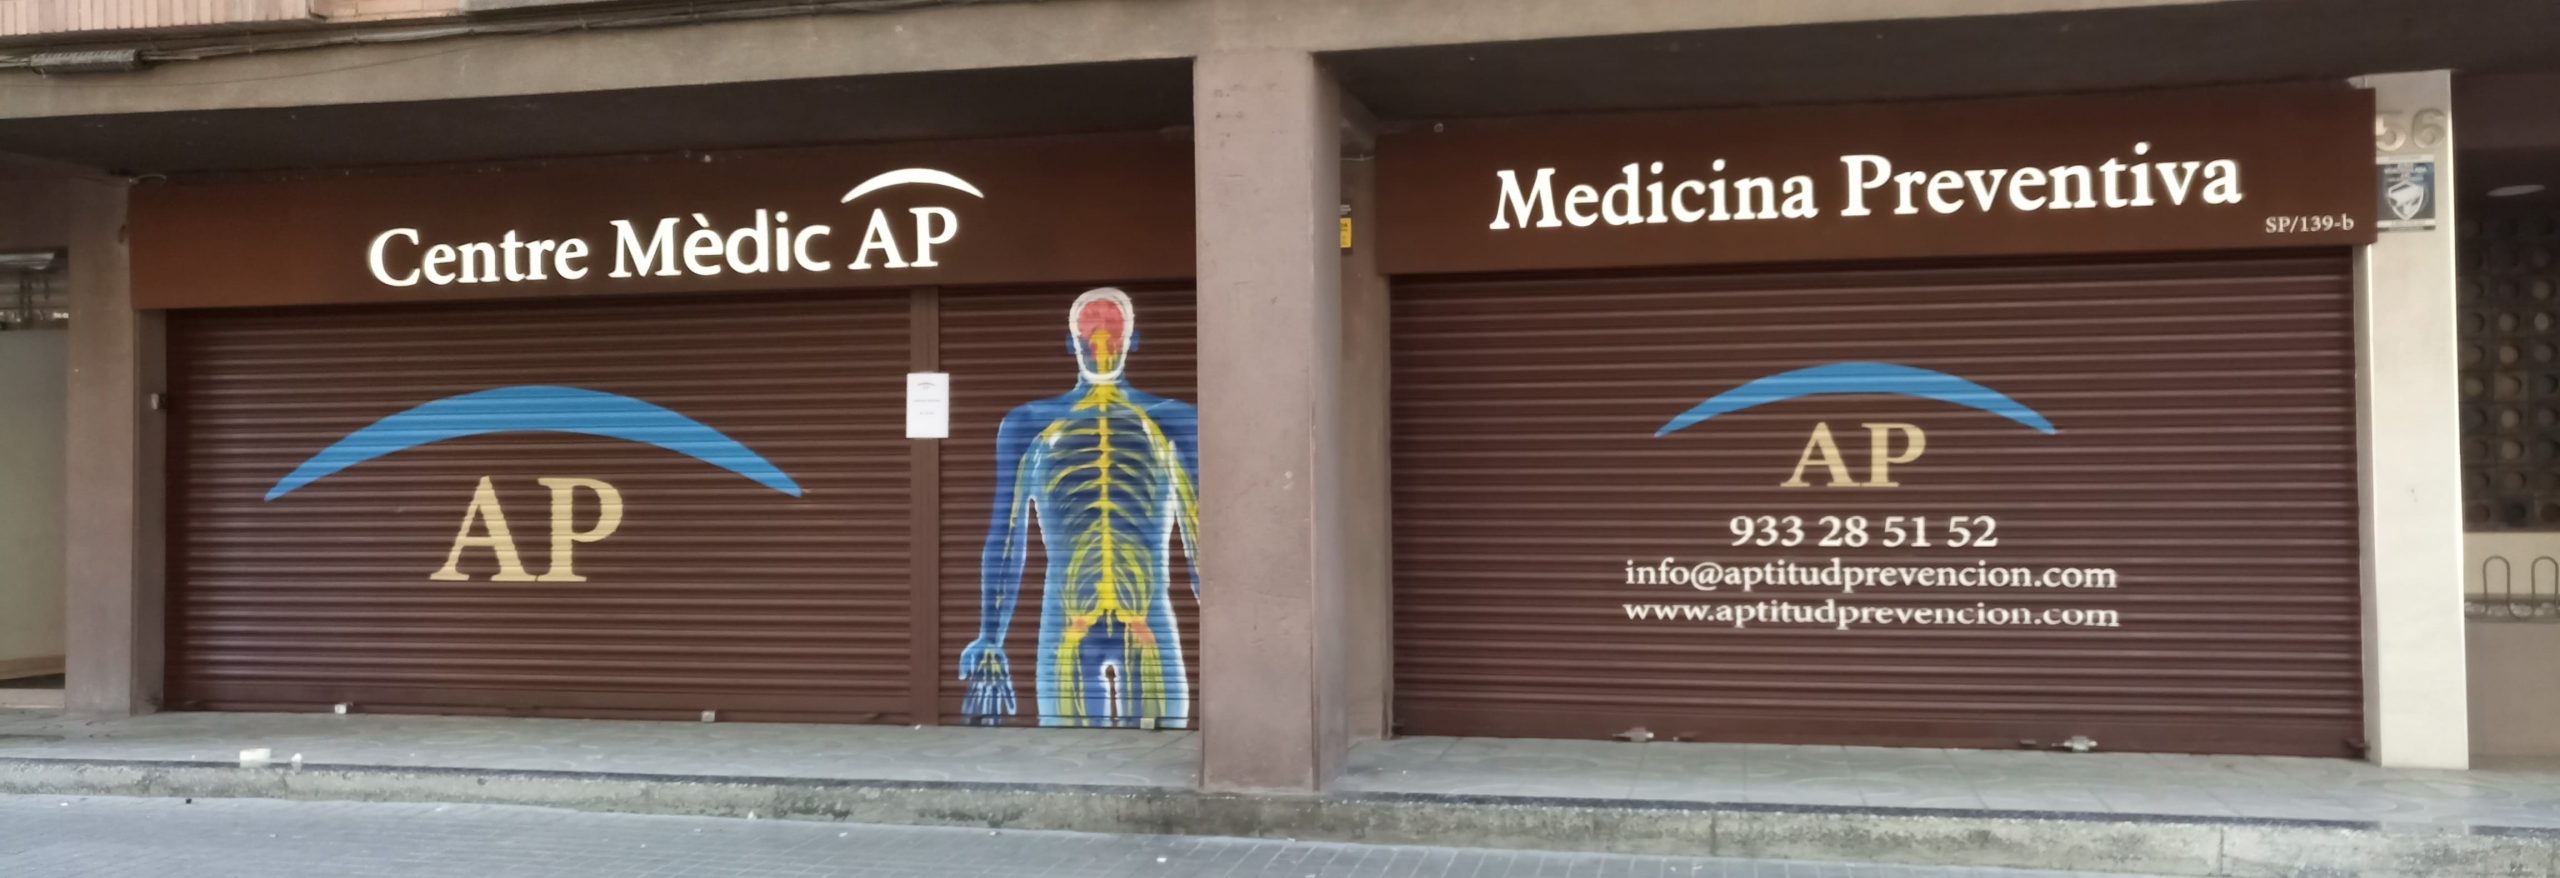 OPT FO DE Centre Medic AP persiana graffiti profesional en Barcelona scaled